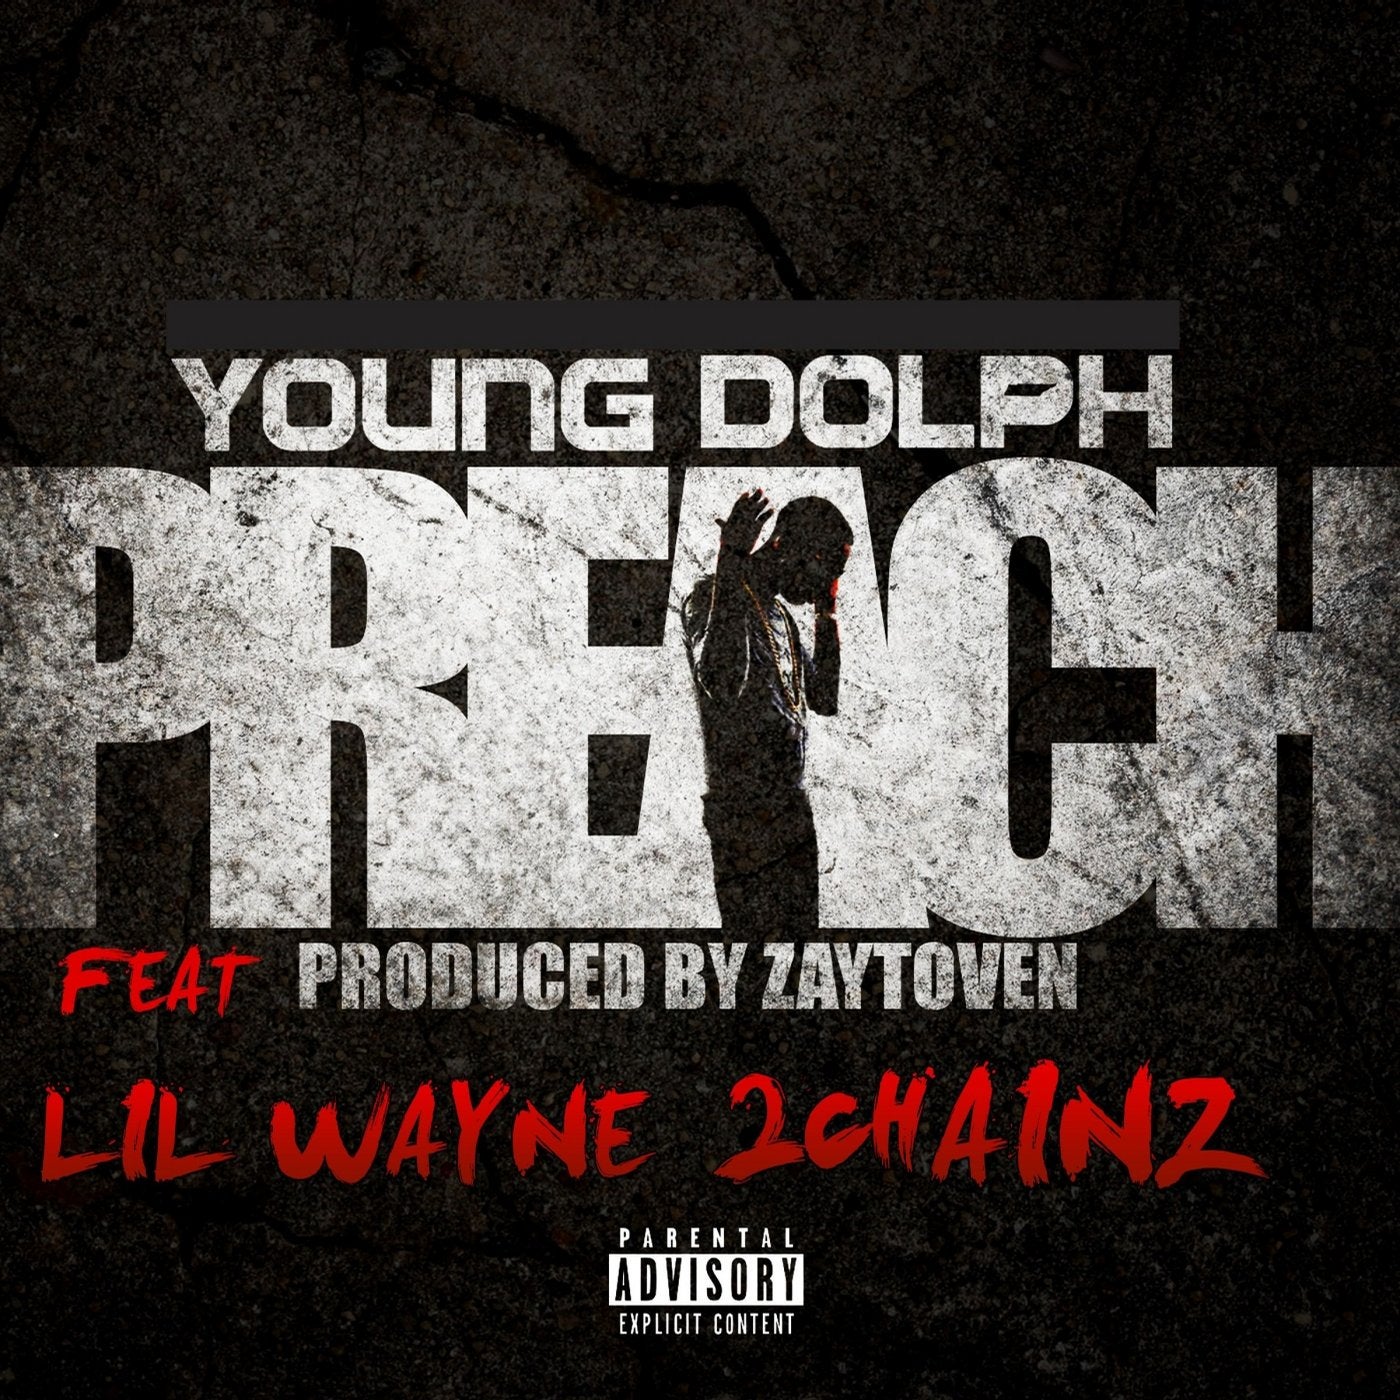 Preach (feat. Lil Wayne & 2 Chainz)